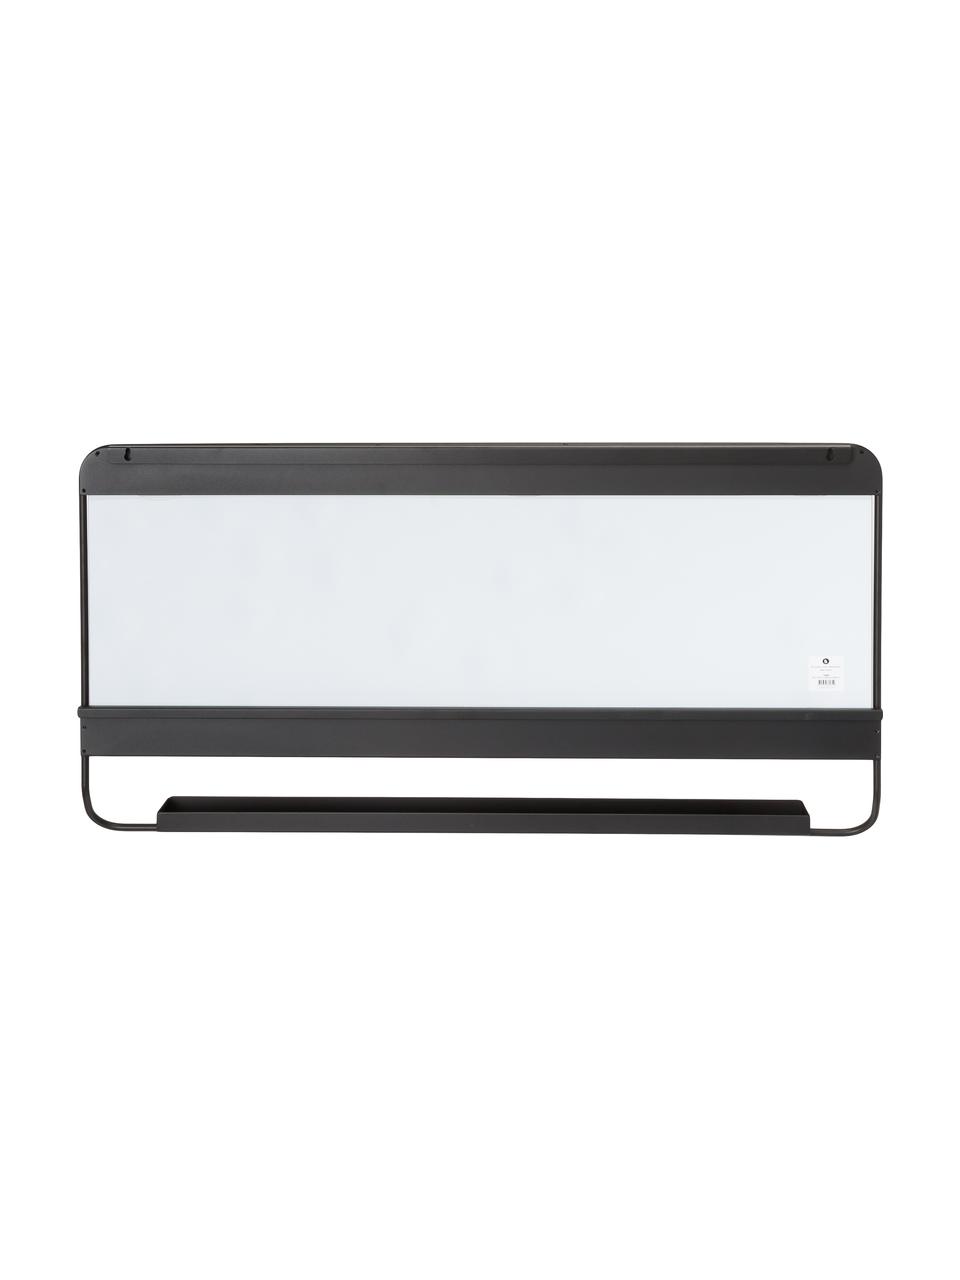 Rechthoekige wandspiegel Chic, Zwart, spiegelglas, B 80 x H 40 cm